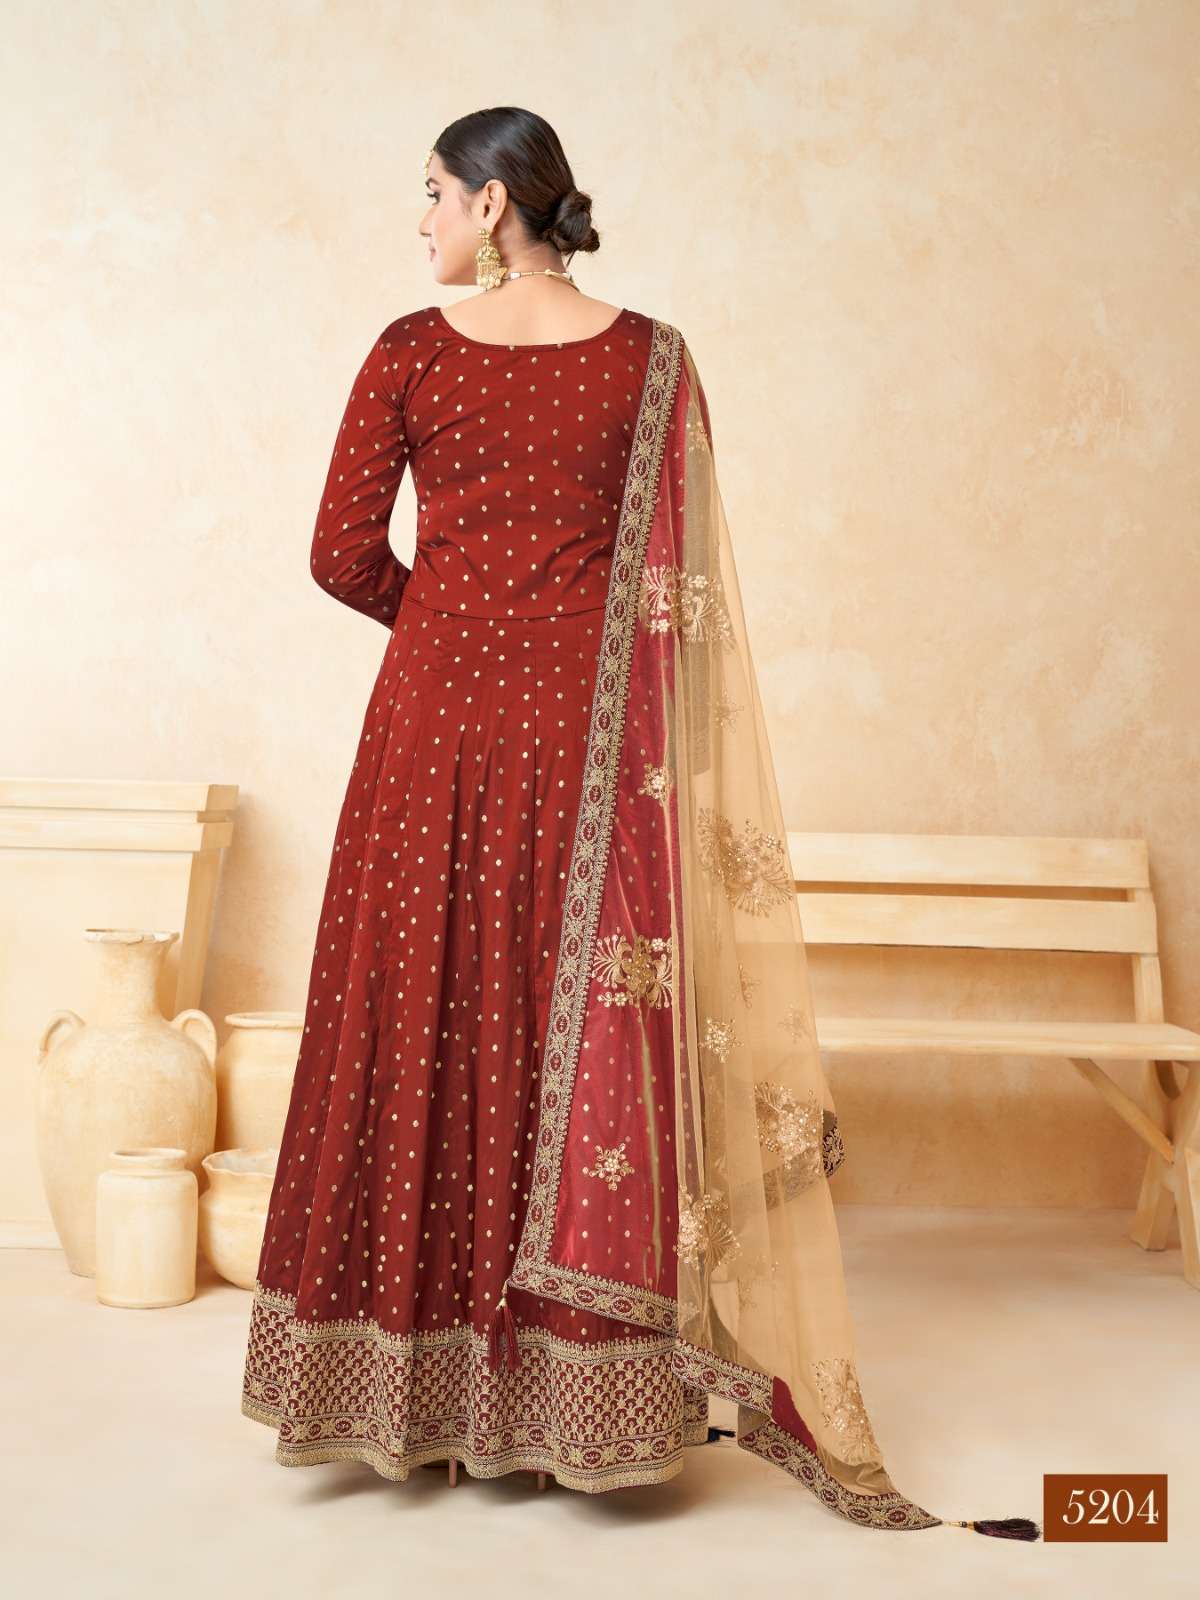 twisha aanaya vol-152 5201-5204 series function special designer salwar suits catalogue surat